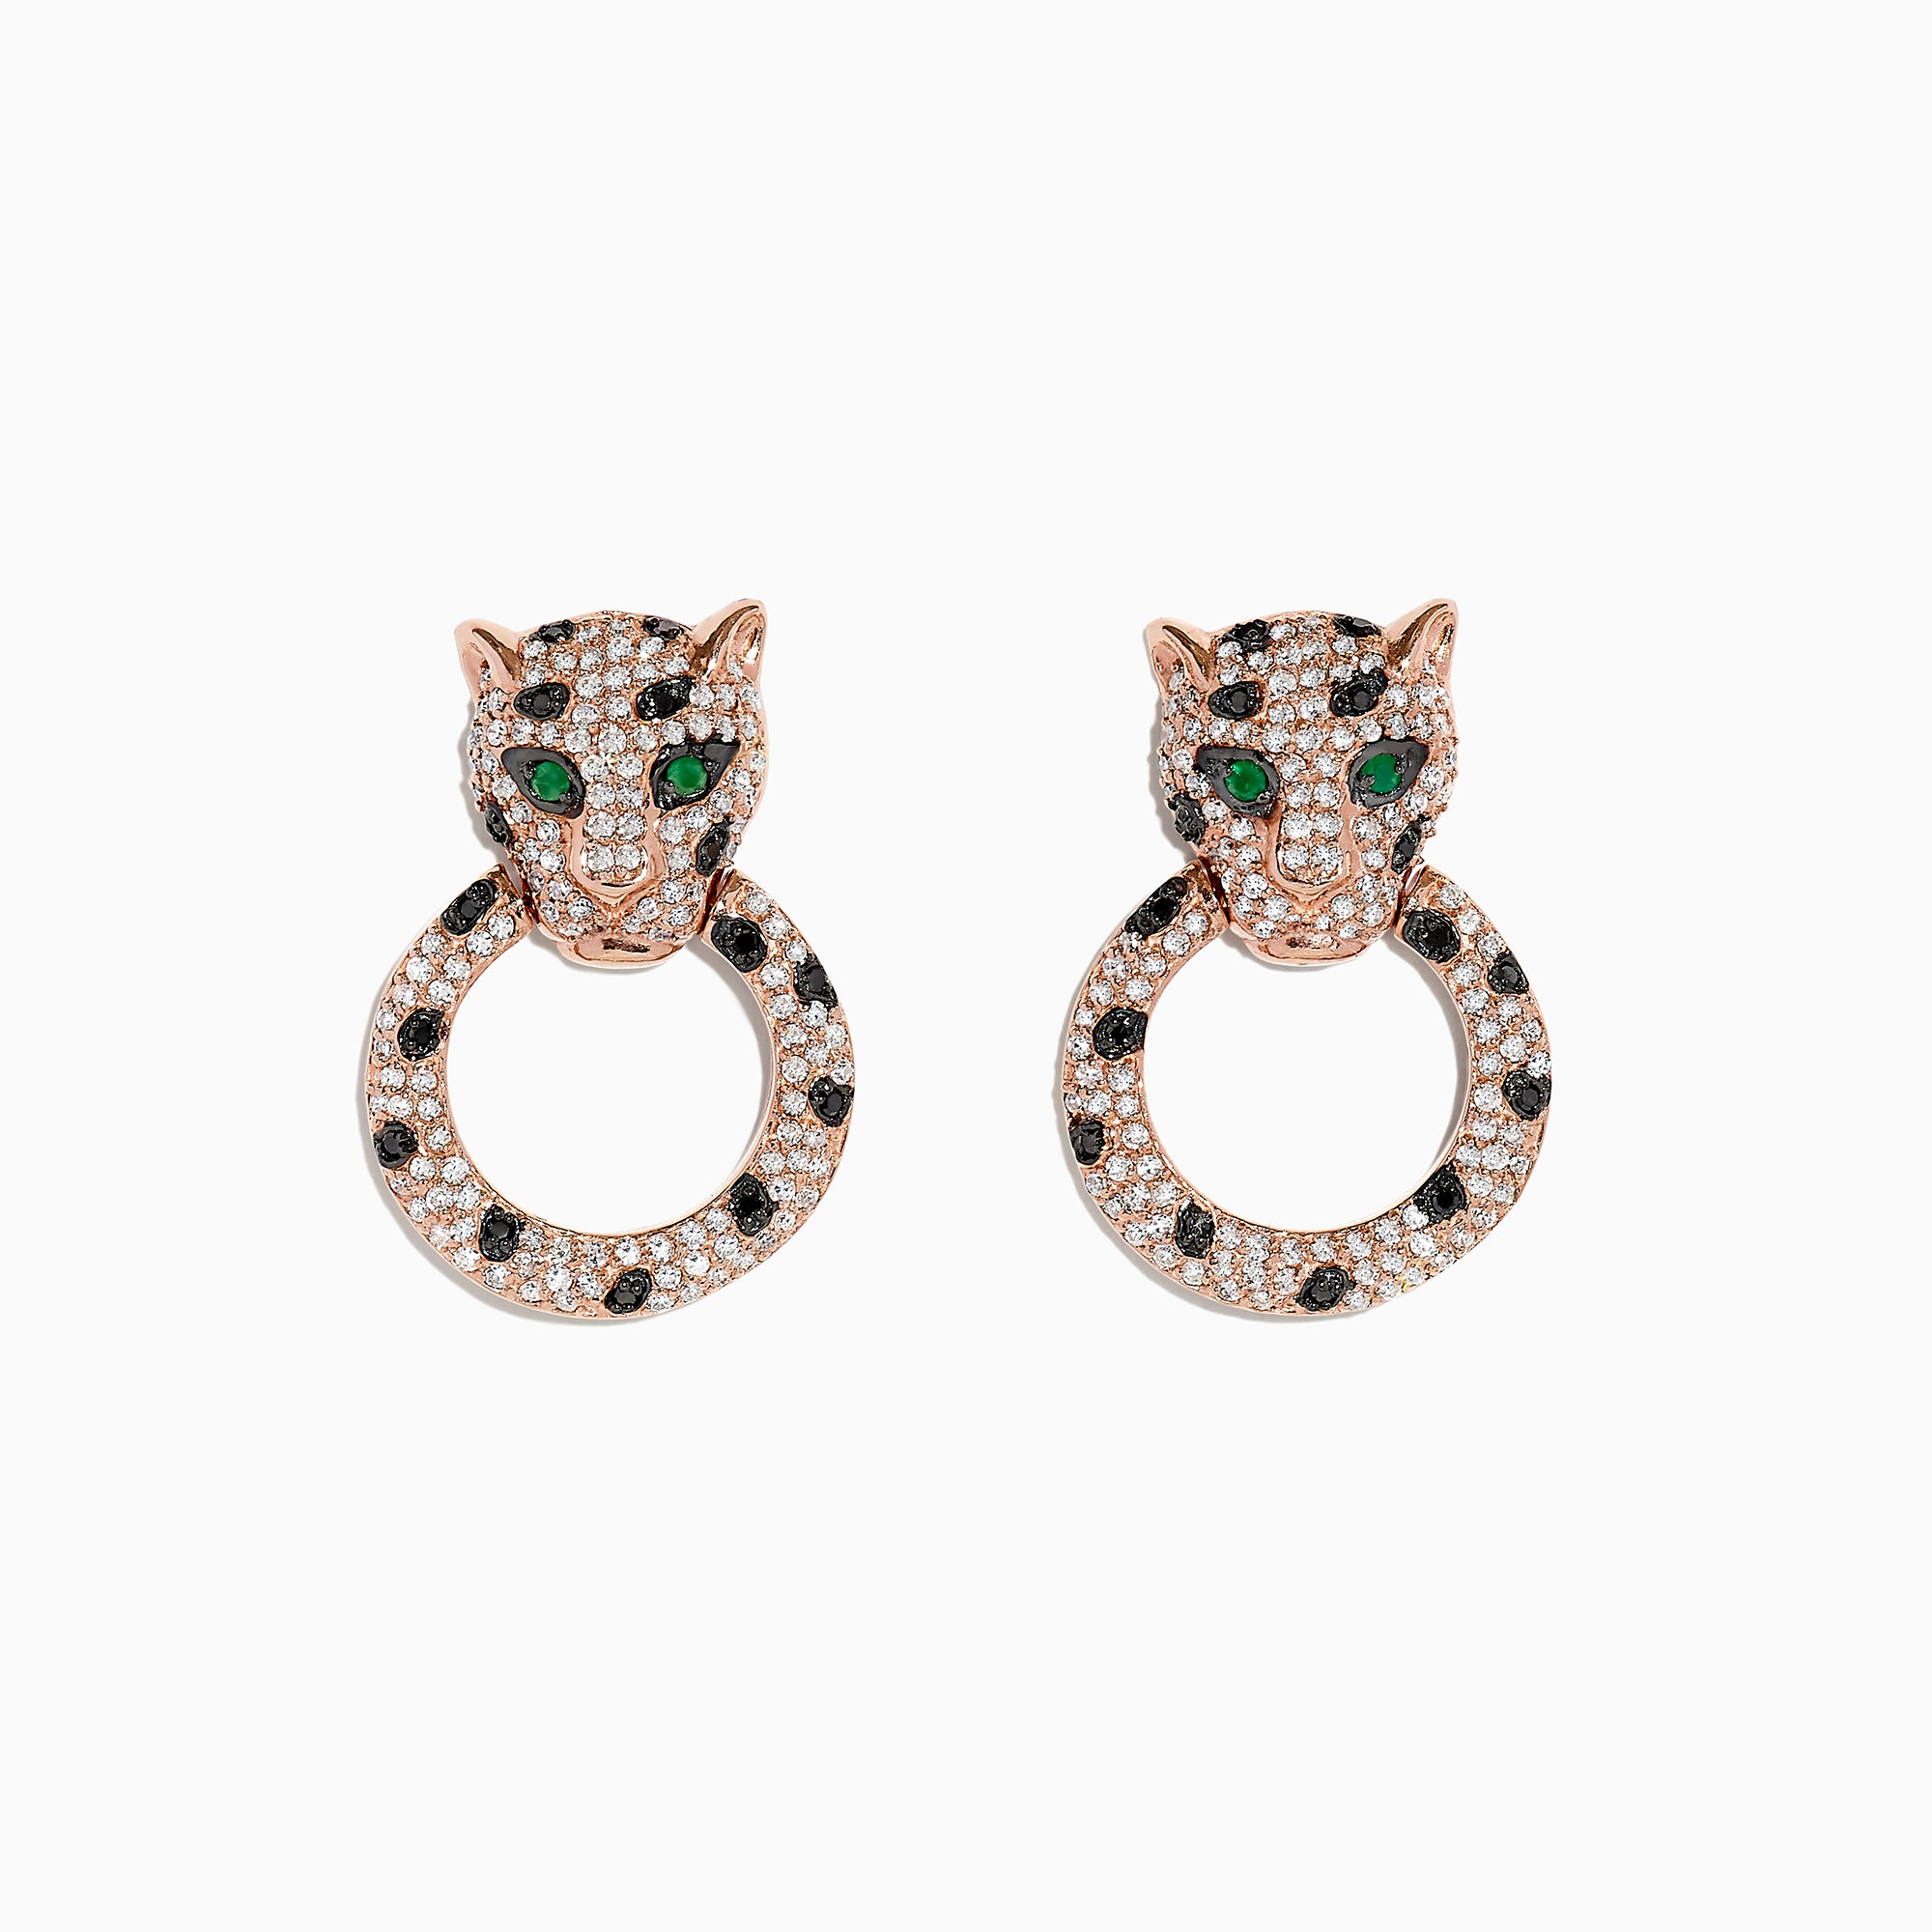 Effy Signature 14K Rose Gold Diamond and Emerald Earrings, 1.57 TCW